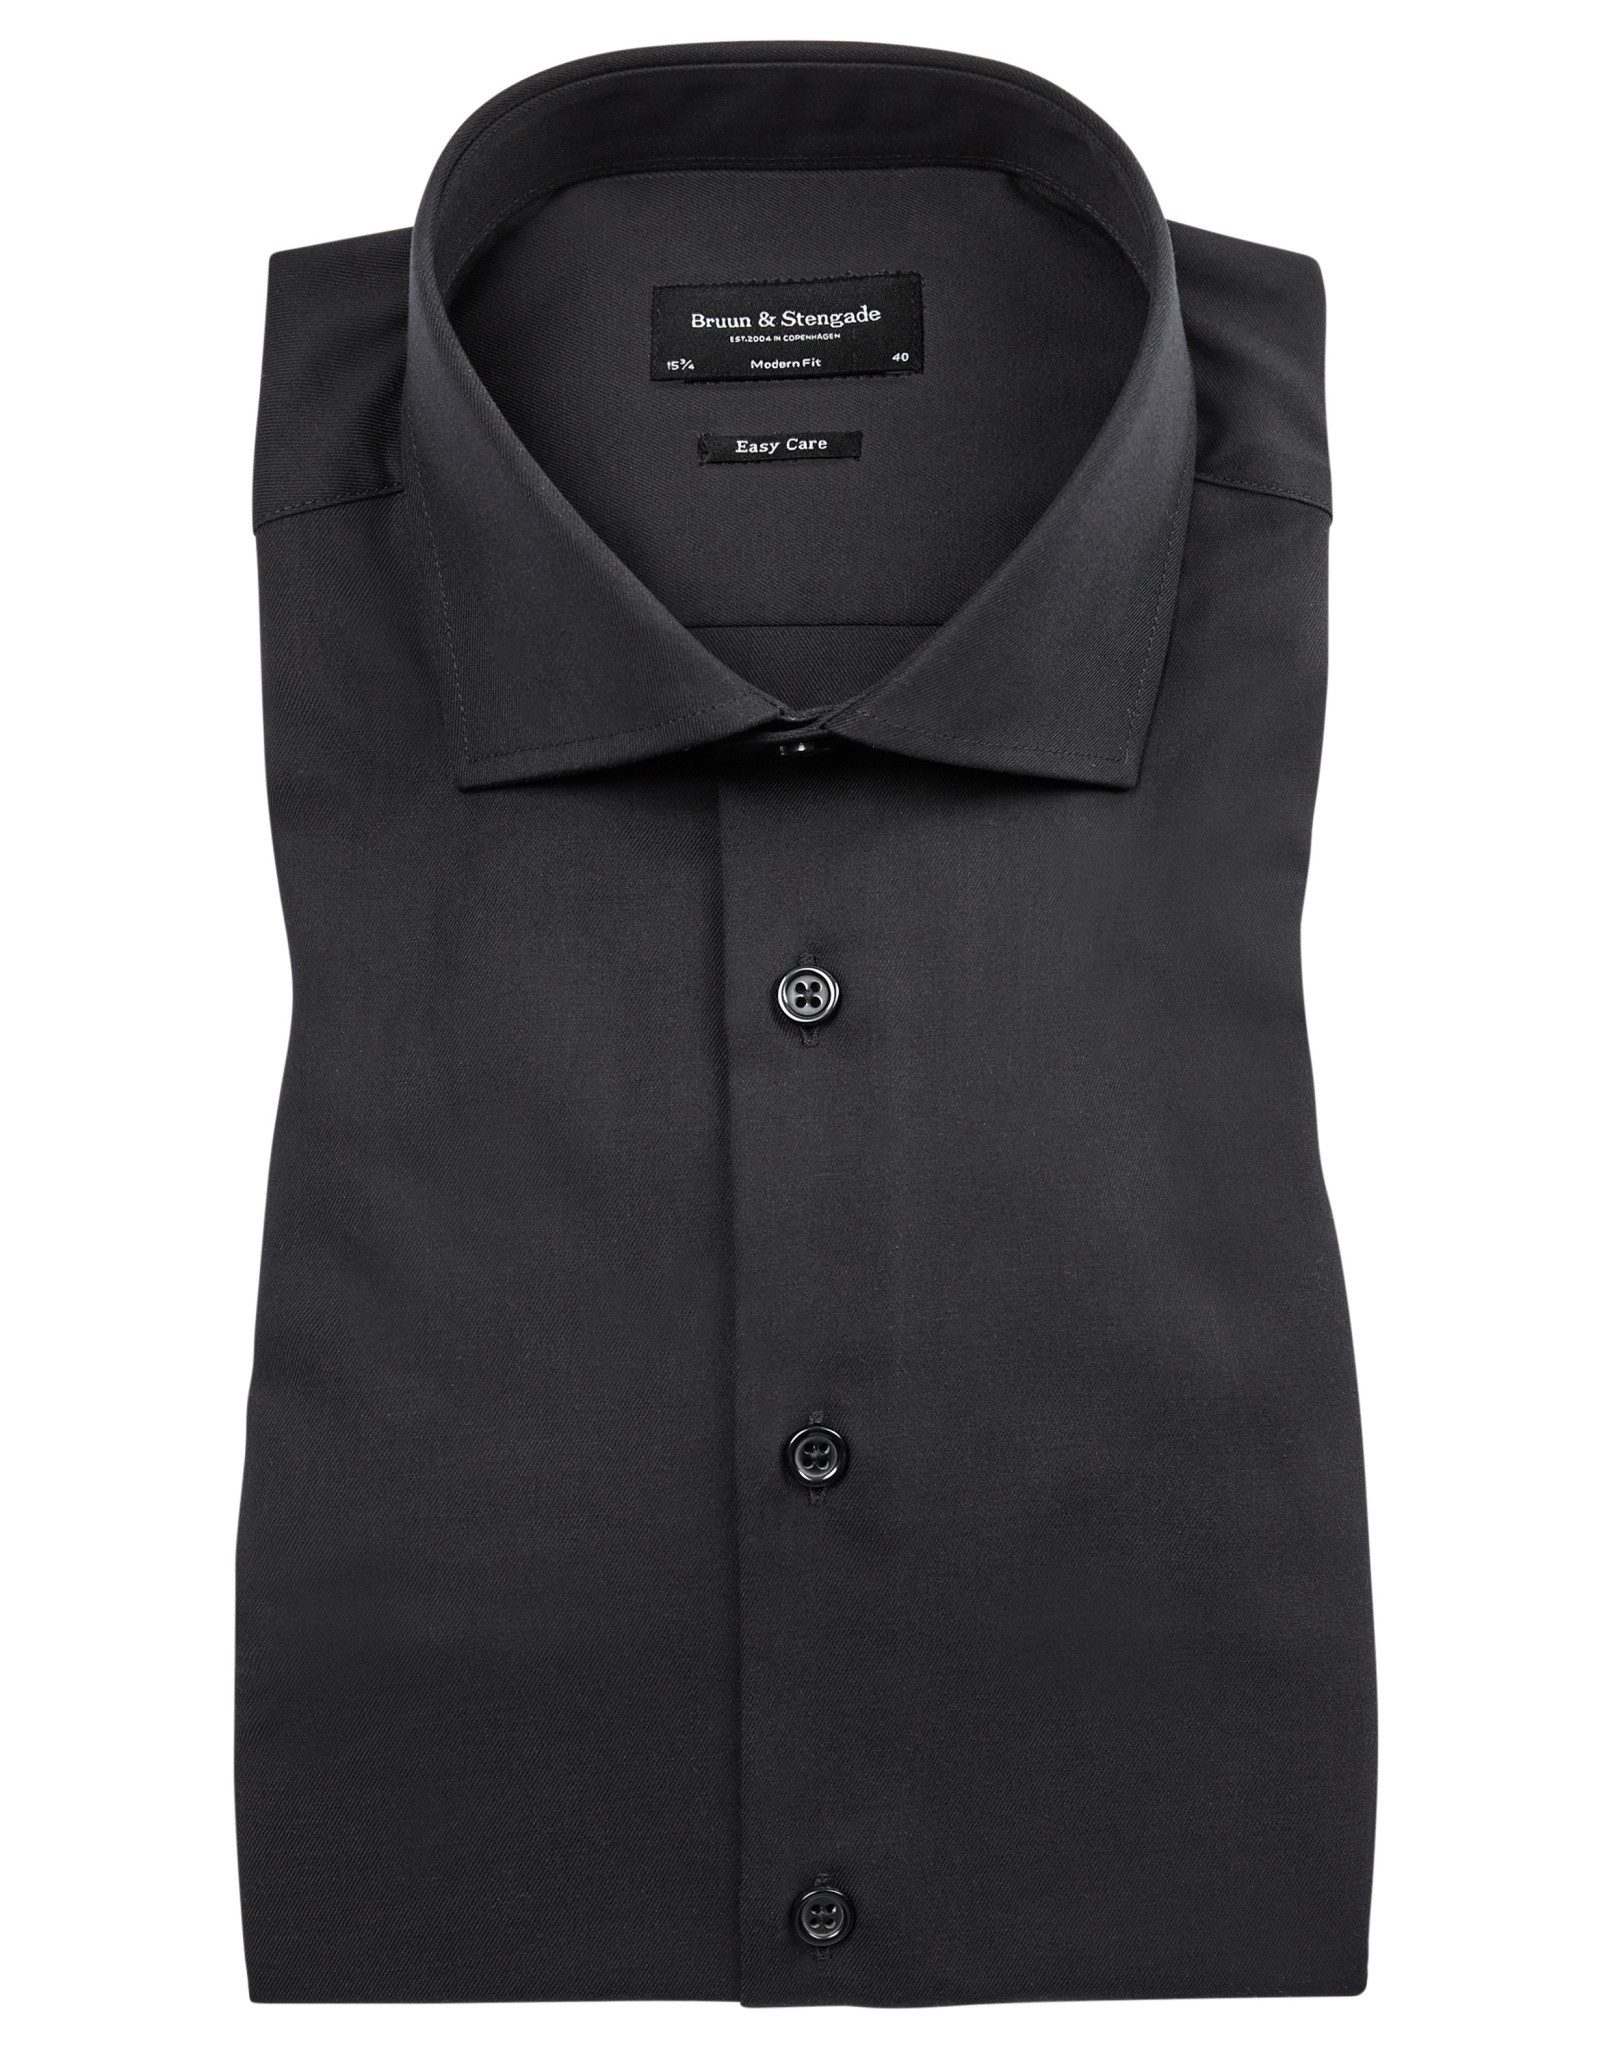 Modern Fit Black Shirt - Benjamin's Menswear